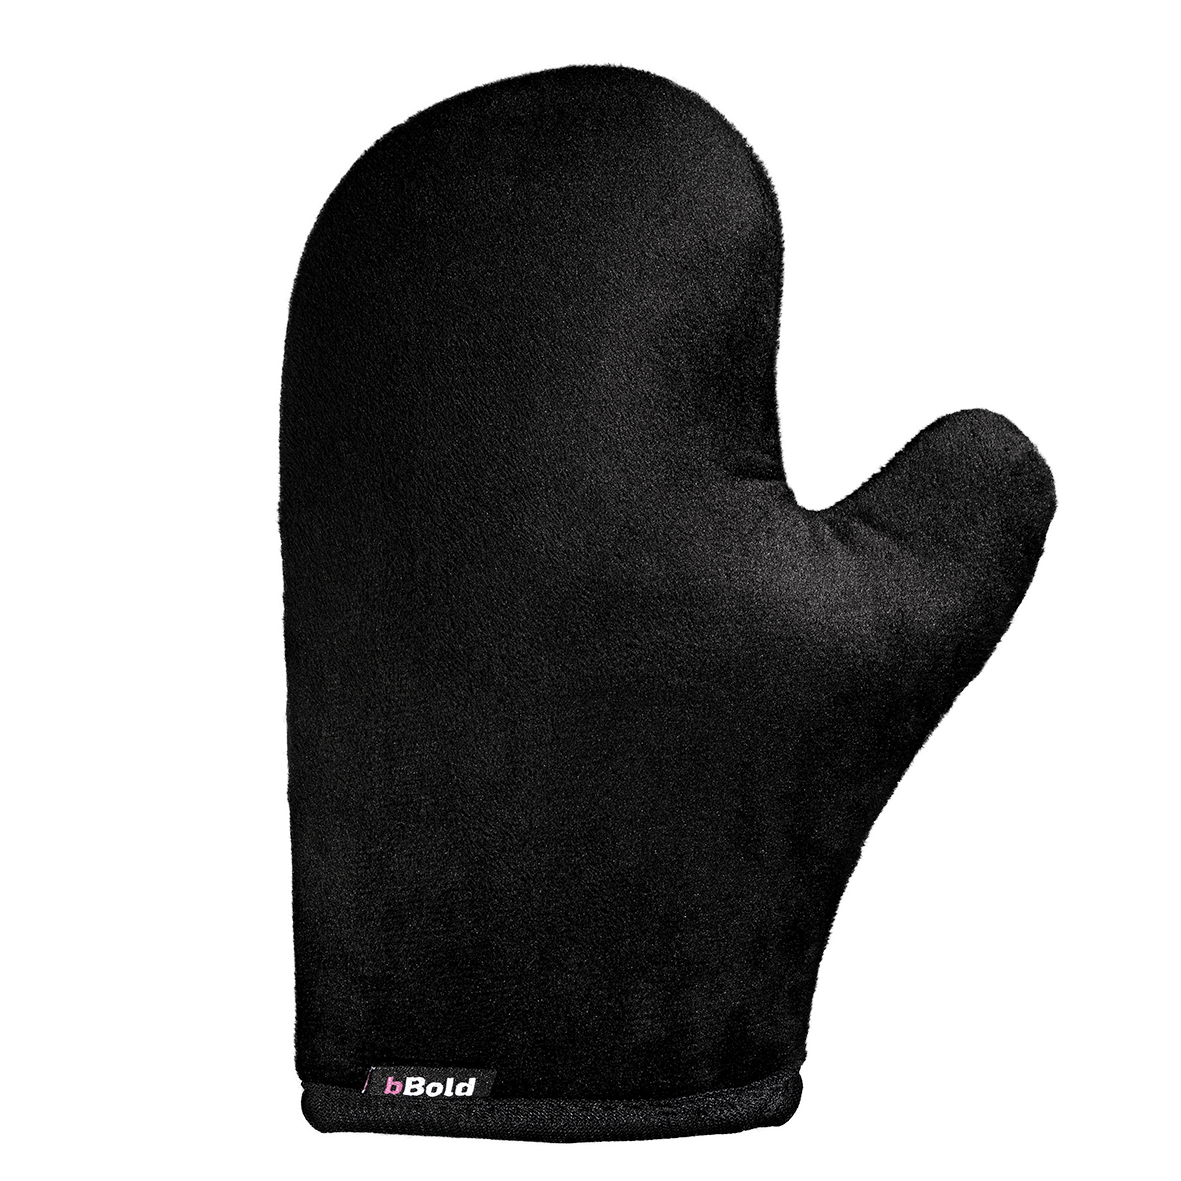 bBold Smooth Applicator Glove €8.95 